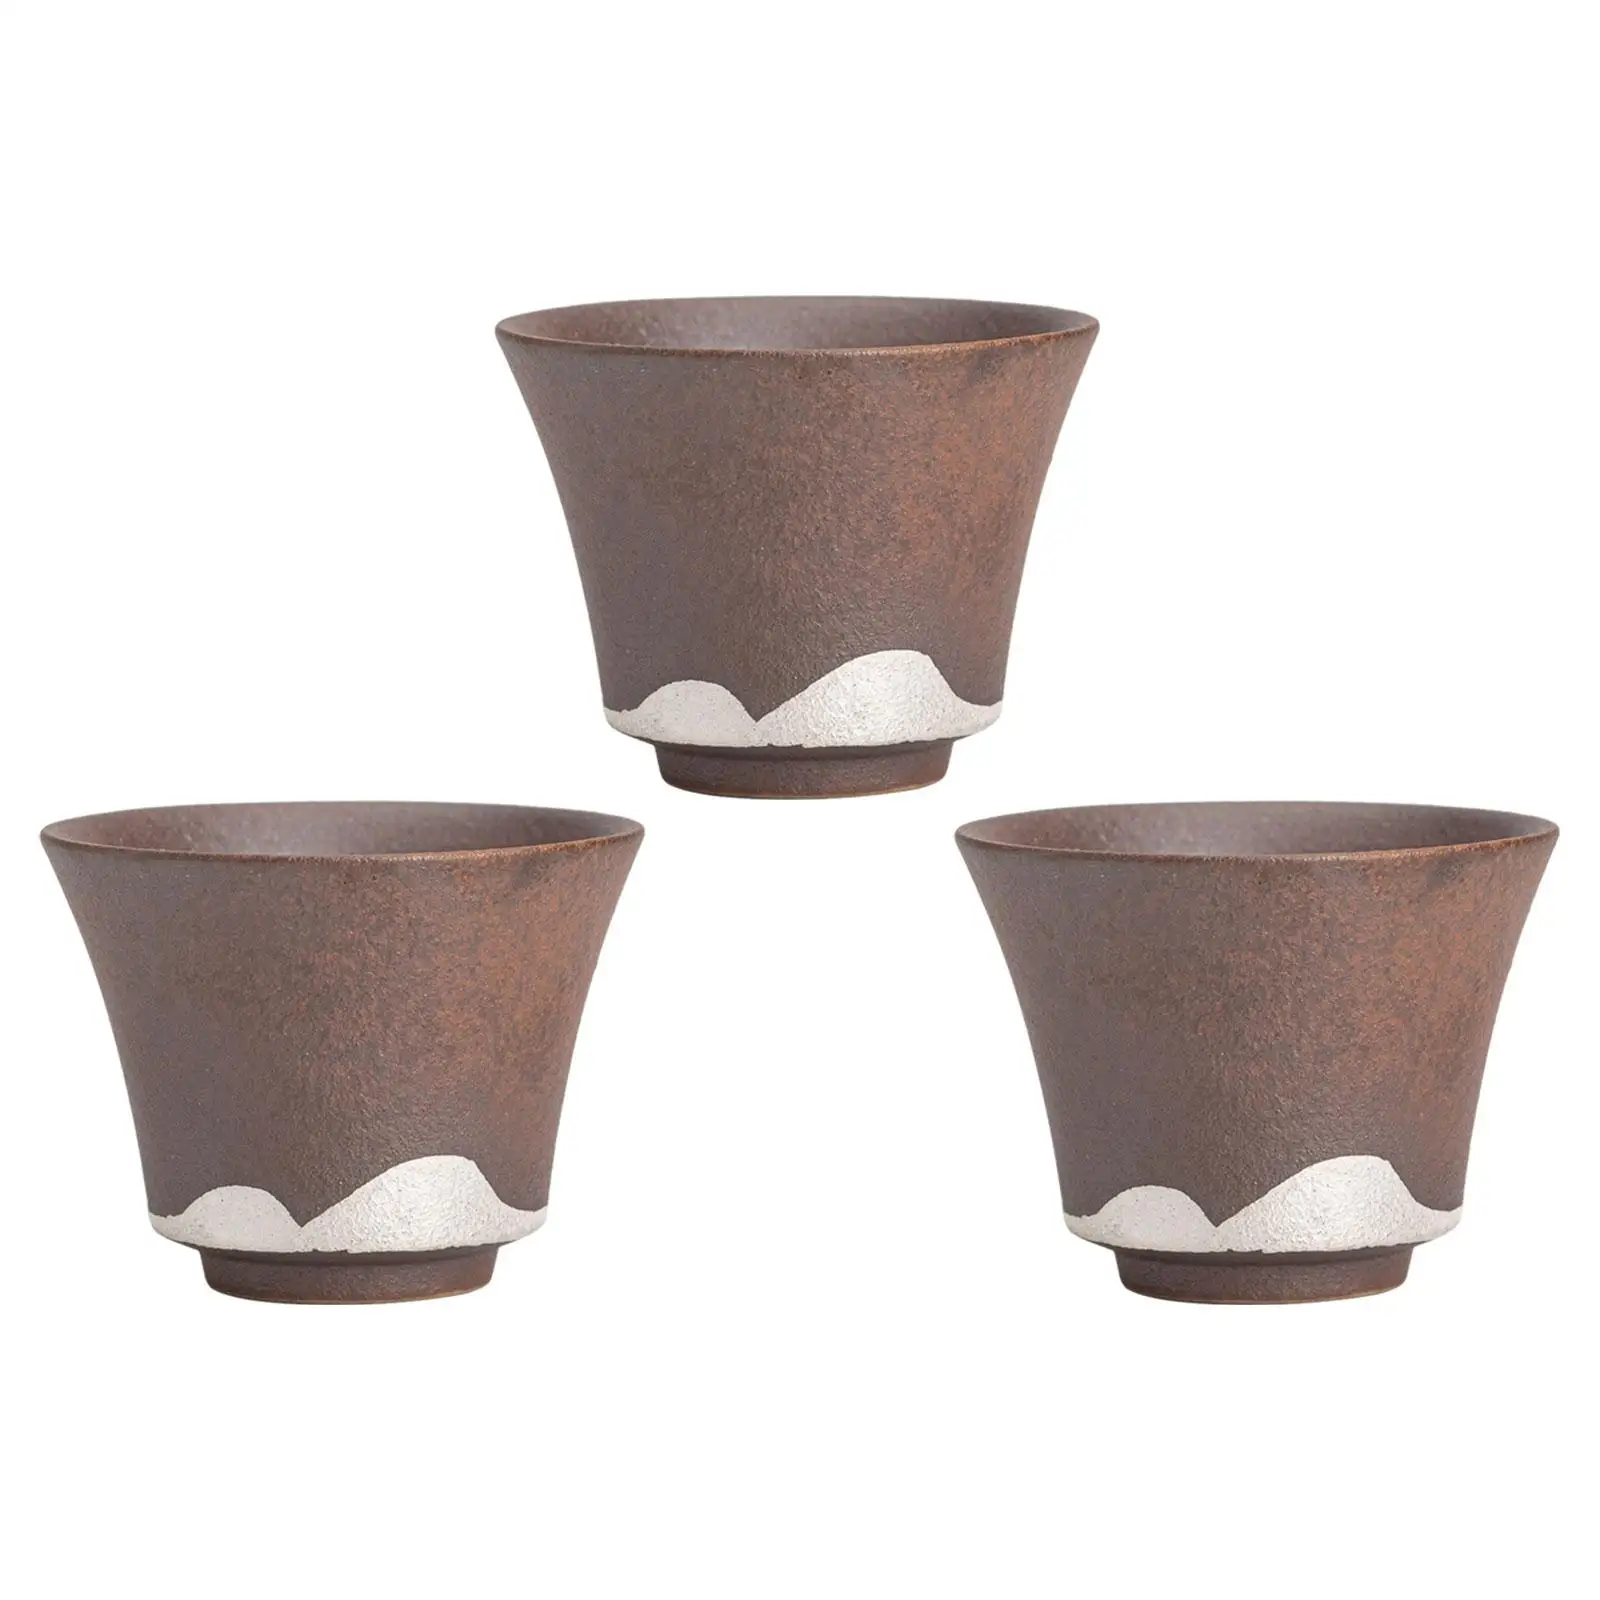 3Pcs Chinese Tea Cup Set Portable Porcelain Tea Pot without Handles Drinkware Tea Mug for Hiking Home Tea House Kitchen Hotel